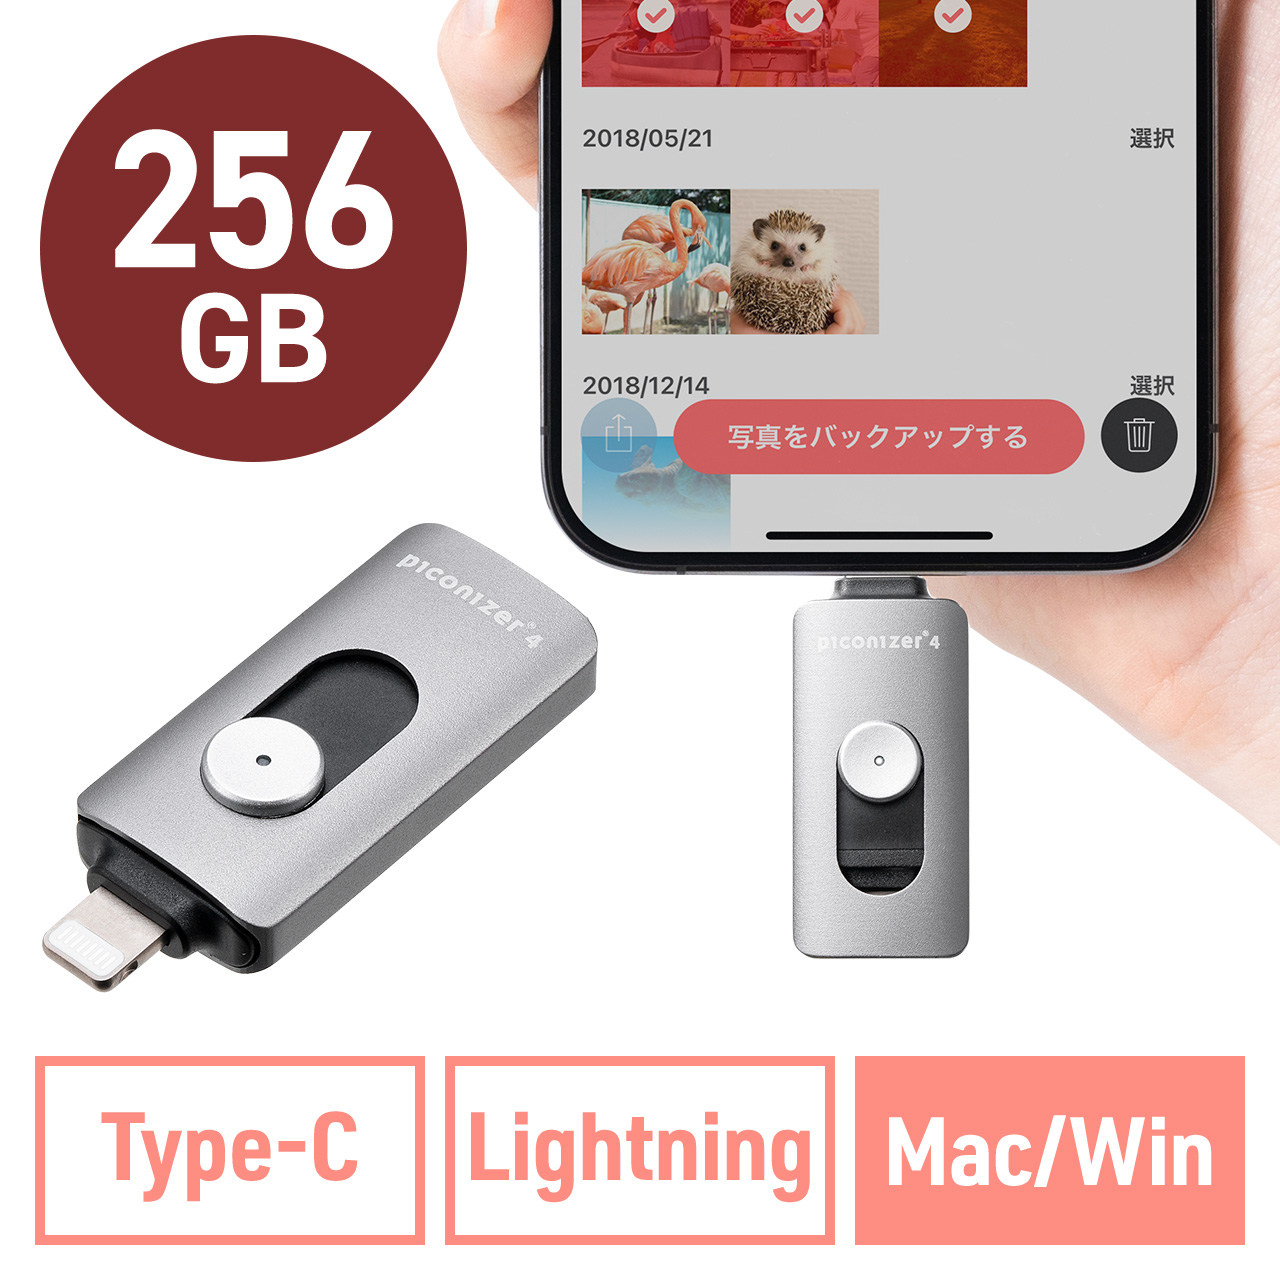 Lightning/Type-C USBメモリ 256GB グレー iPhone Android 対応